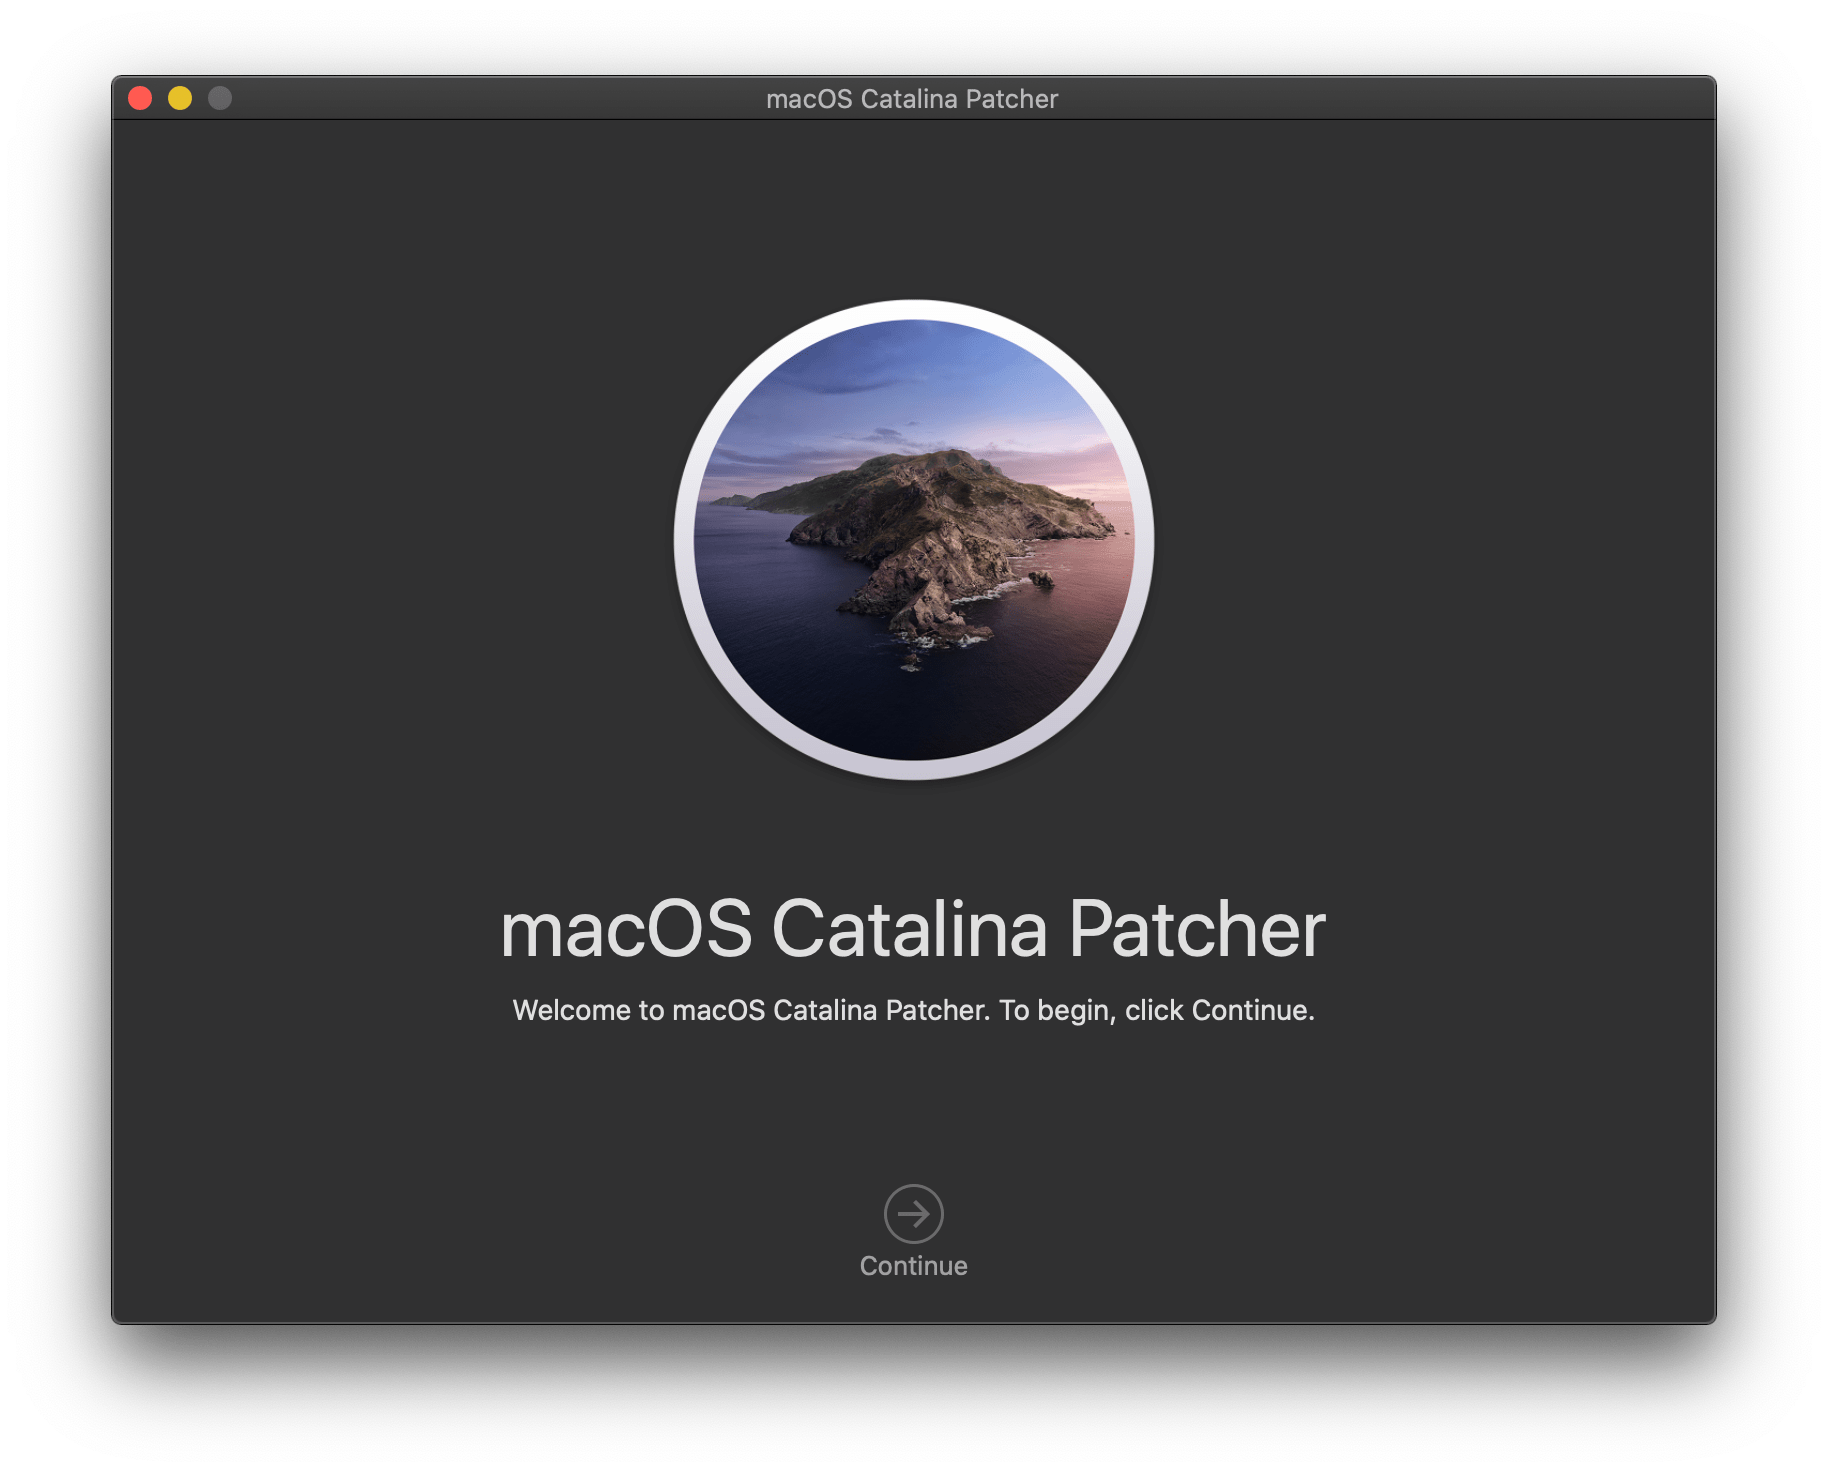 download install macos catalina.app